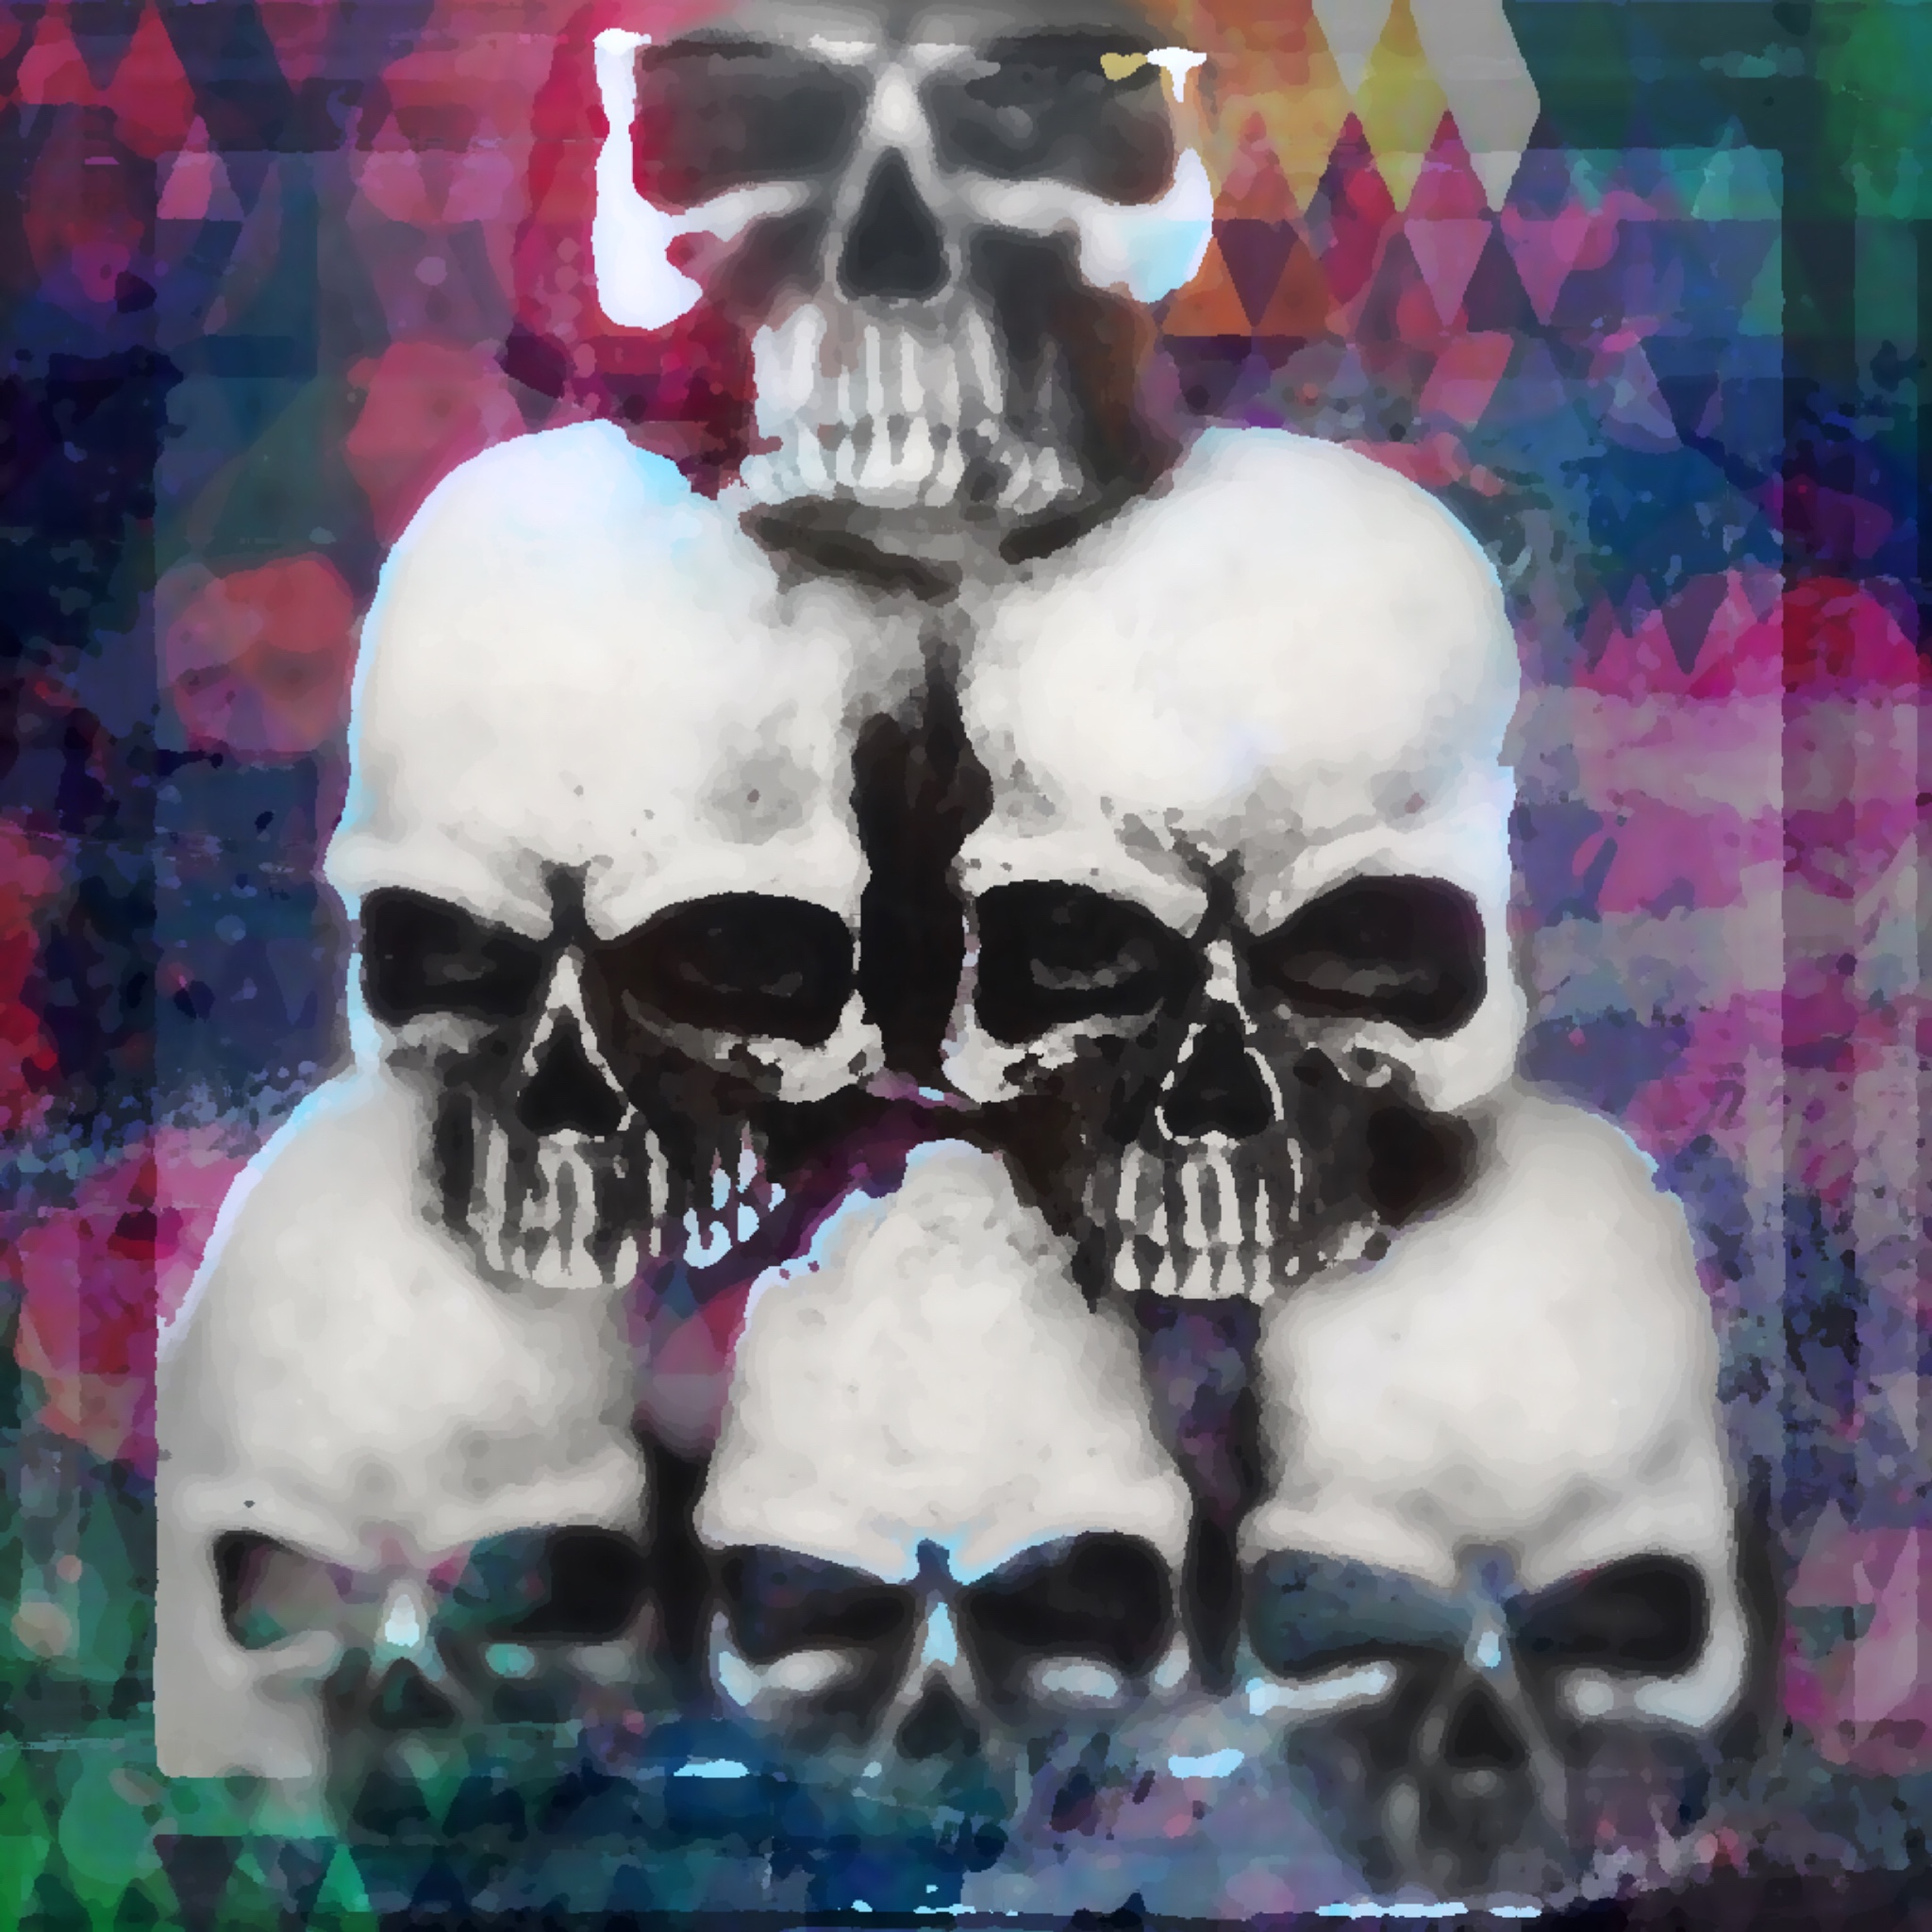 Alas,Poor Yorick Pyramid of skulls by Janey